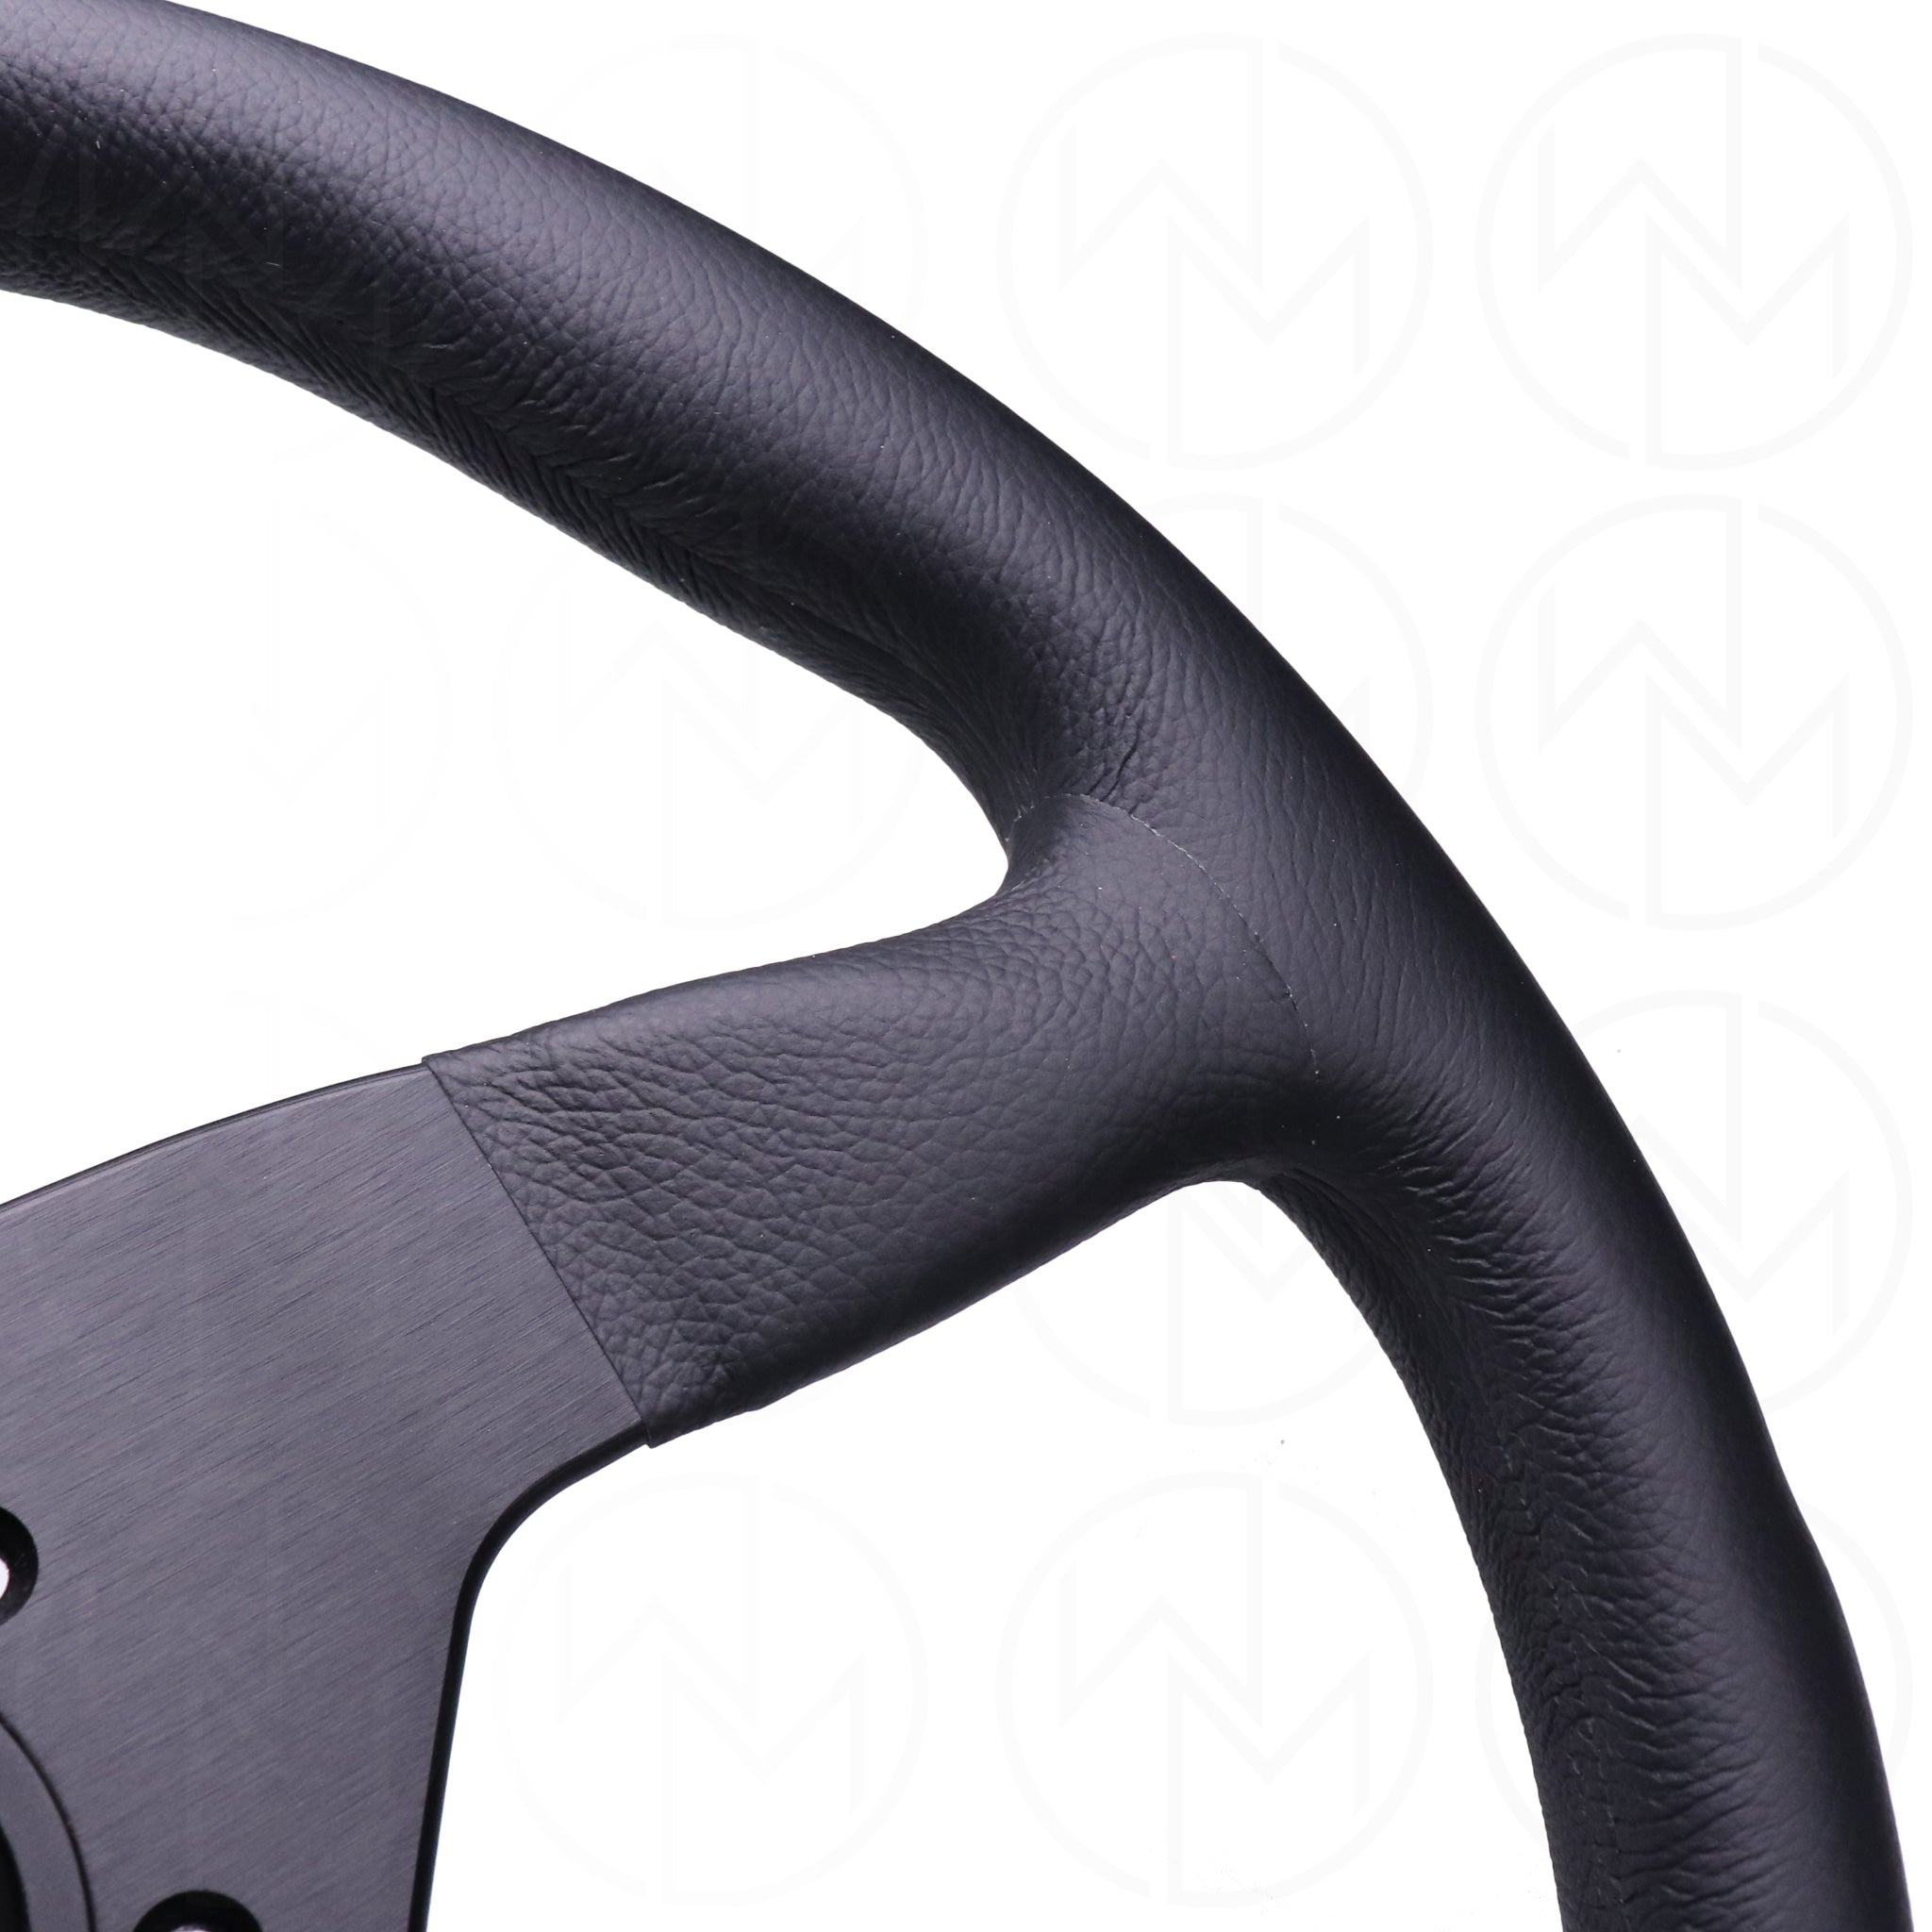 Momo Mod. 78 Steering Wheel - 350mm Leather